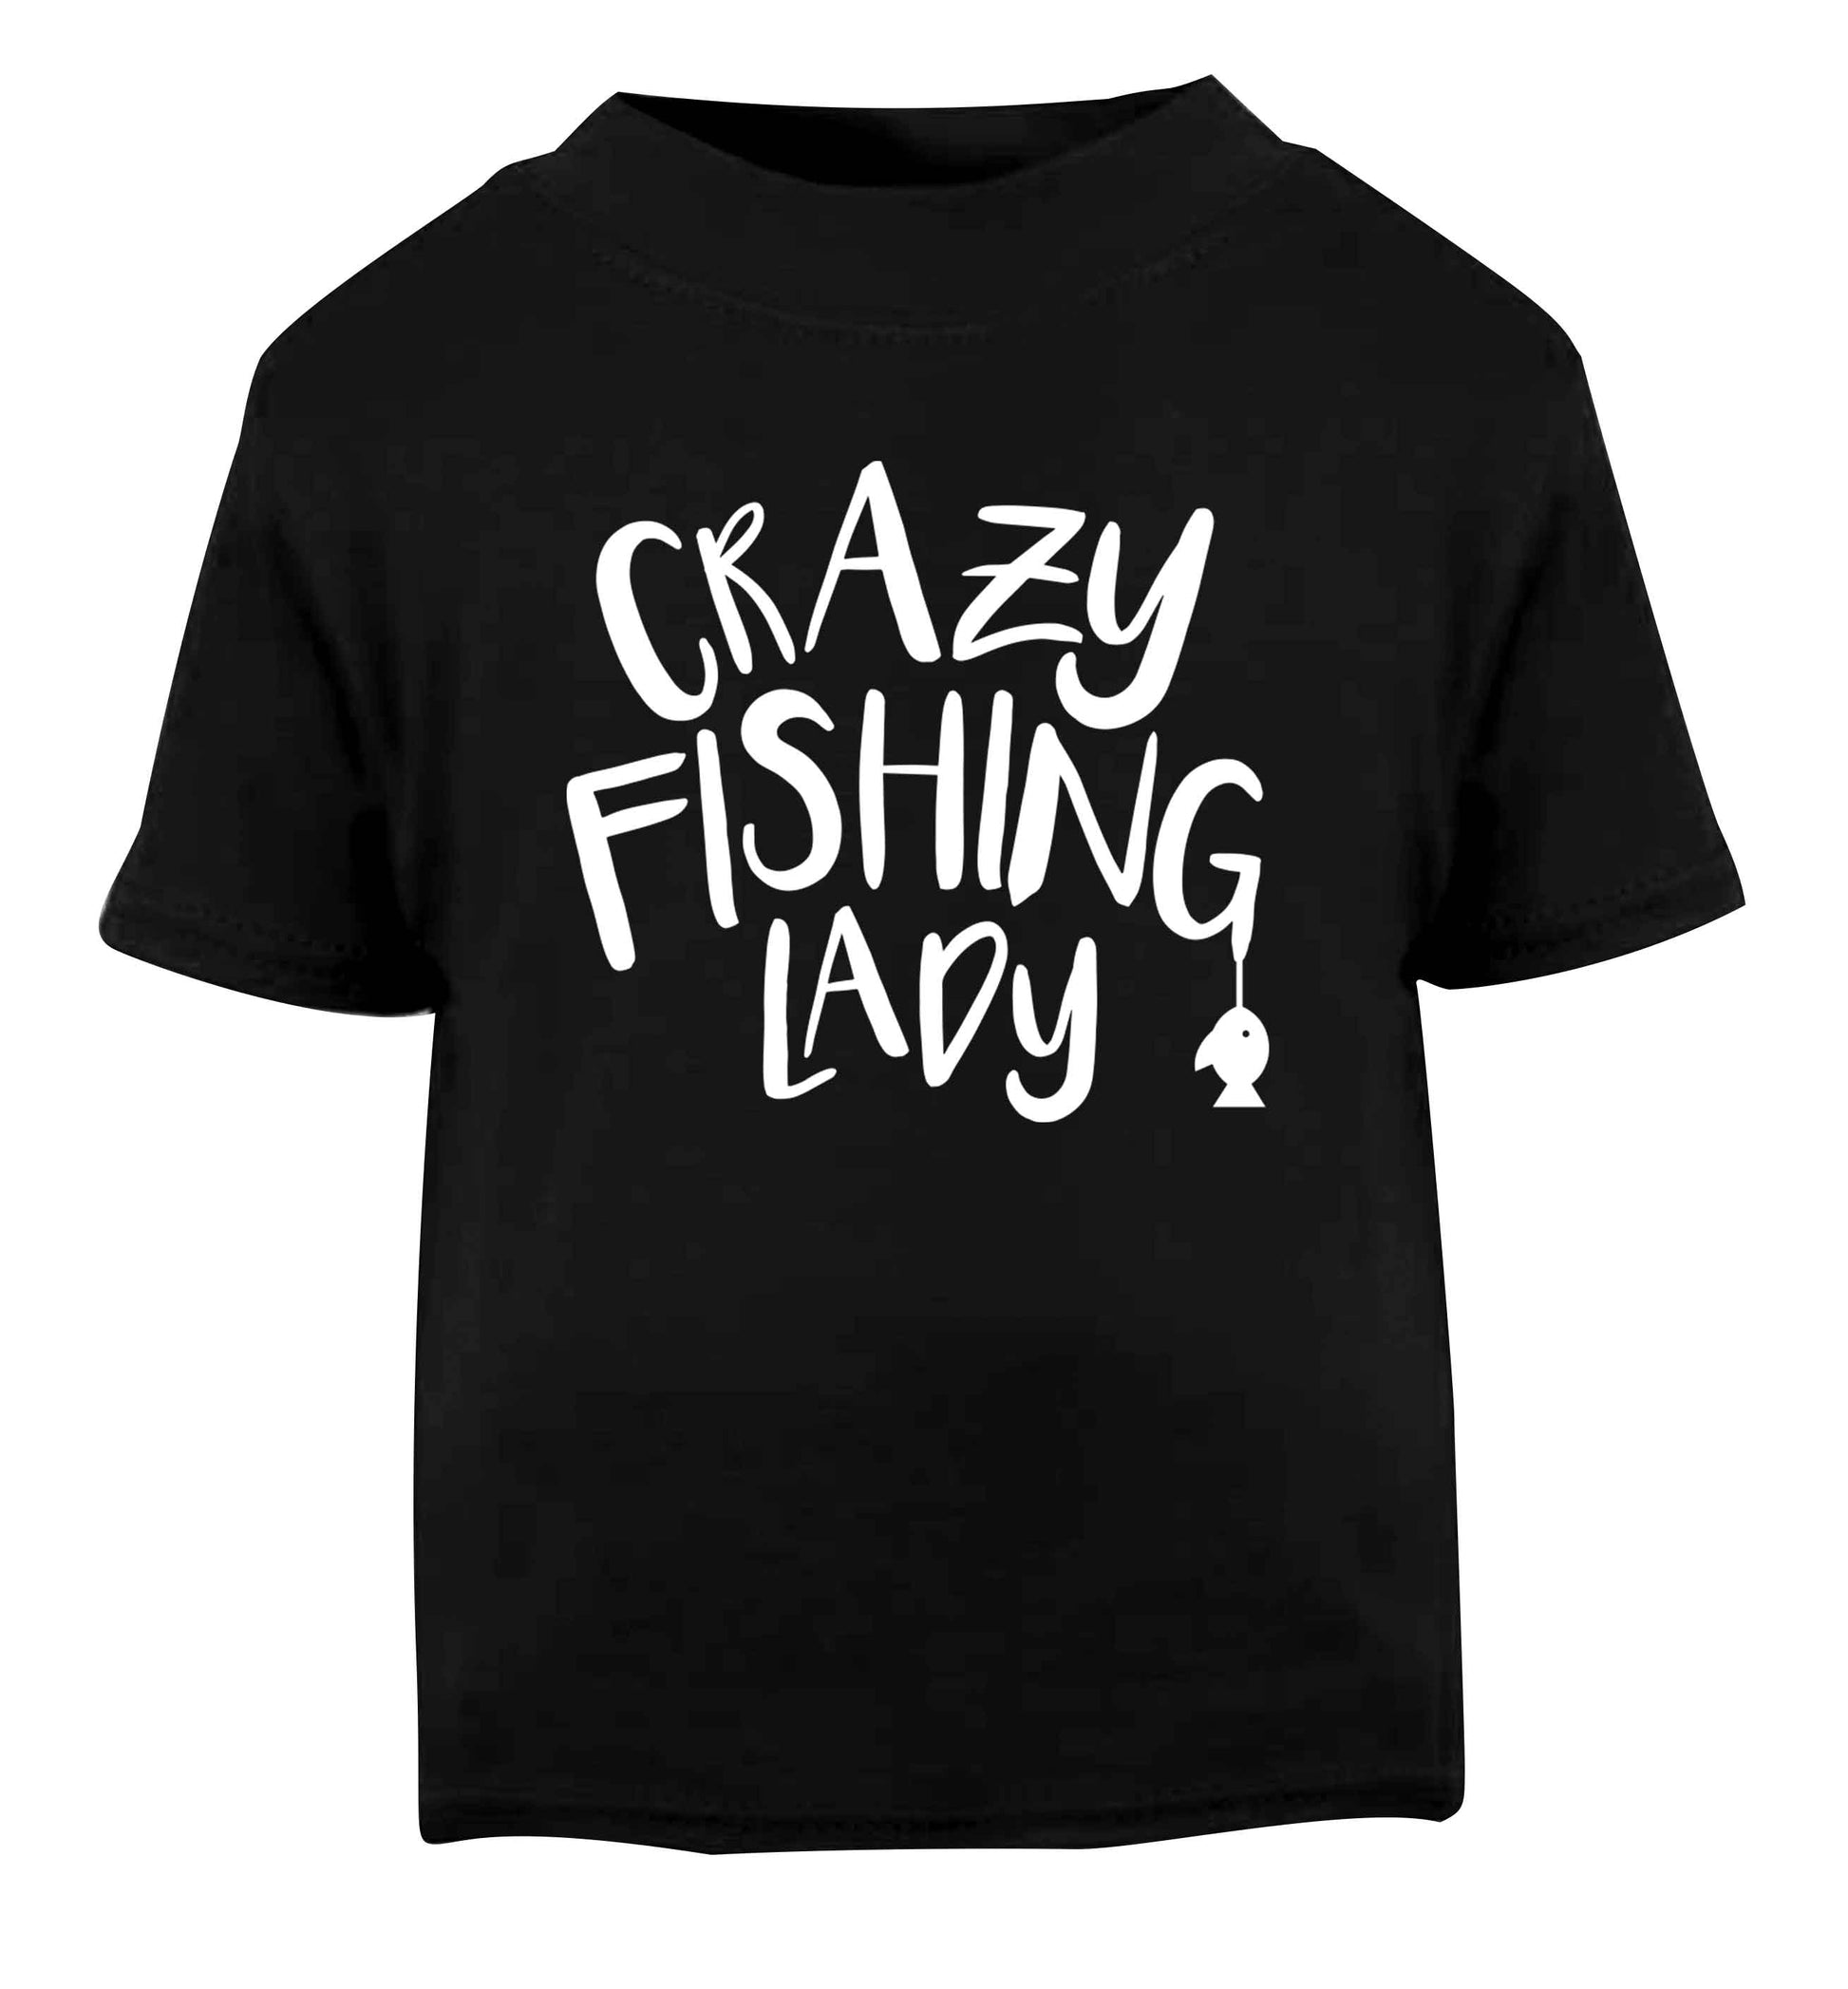 Crazy fishing lady Black Baby Toddler Tshirt 2 years